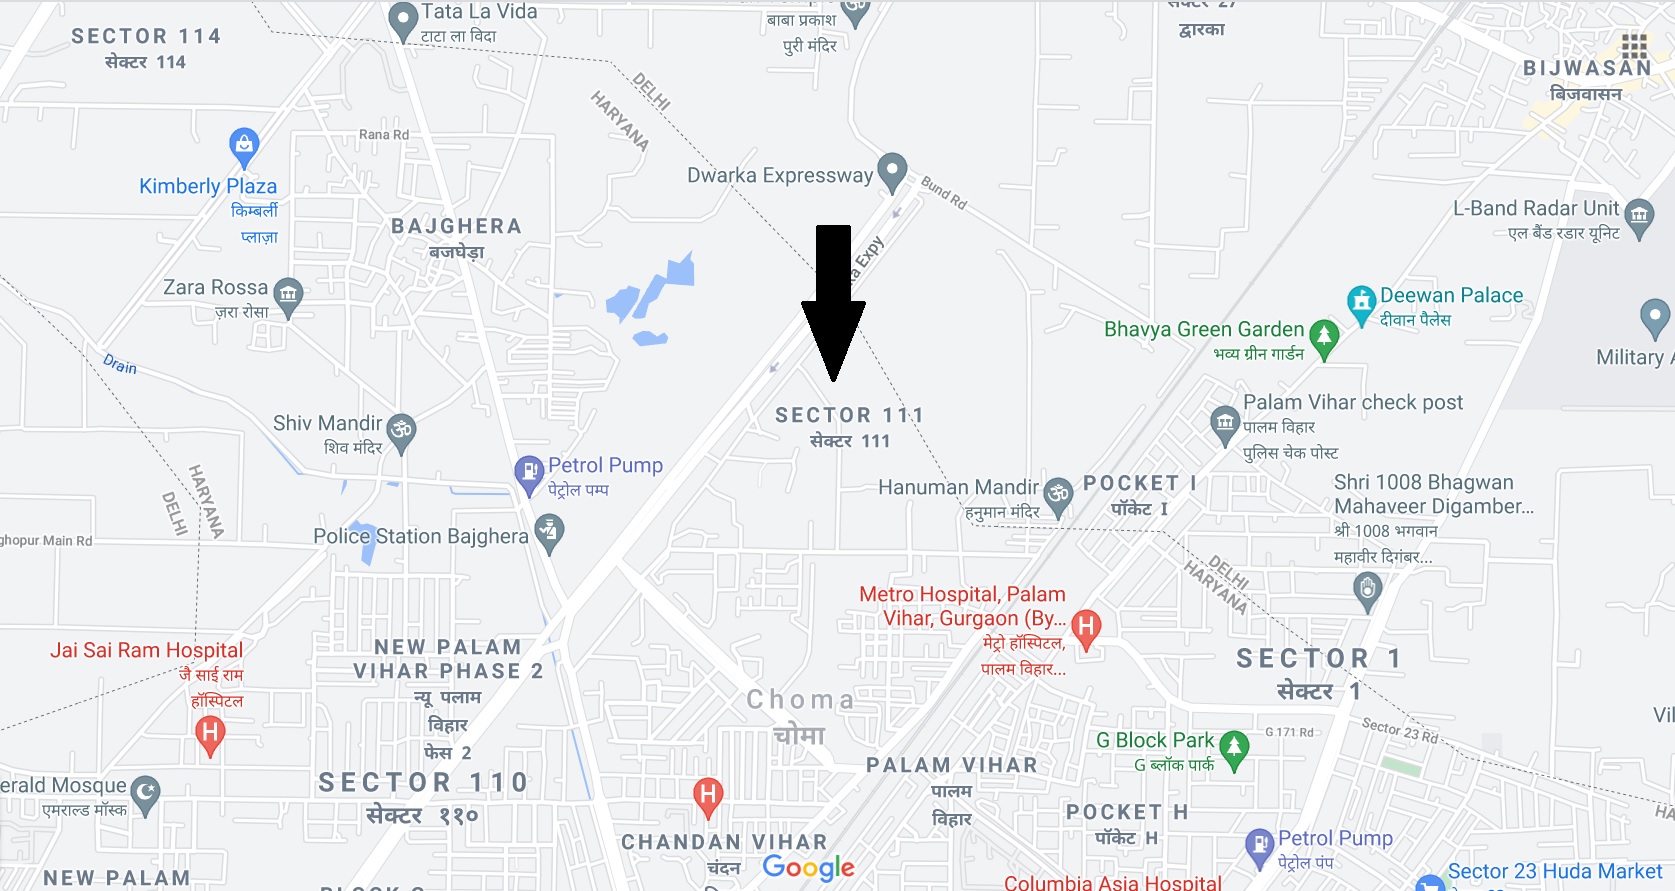 M3M Smart City Delhi Airport Sector 111 location map